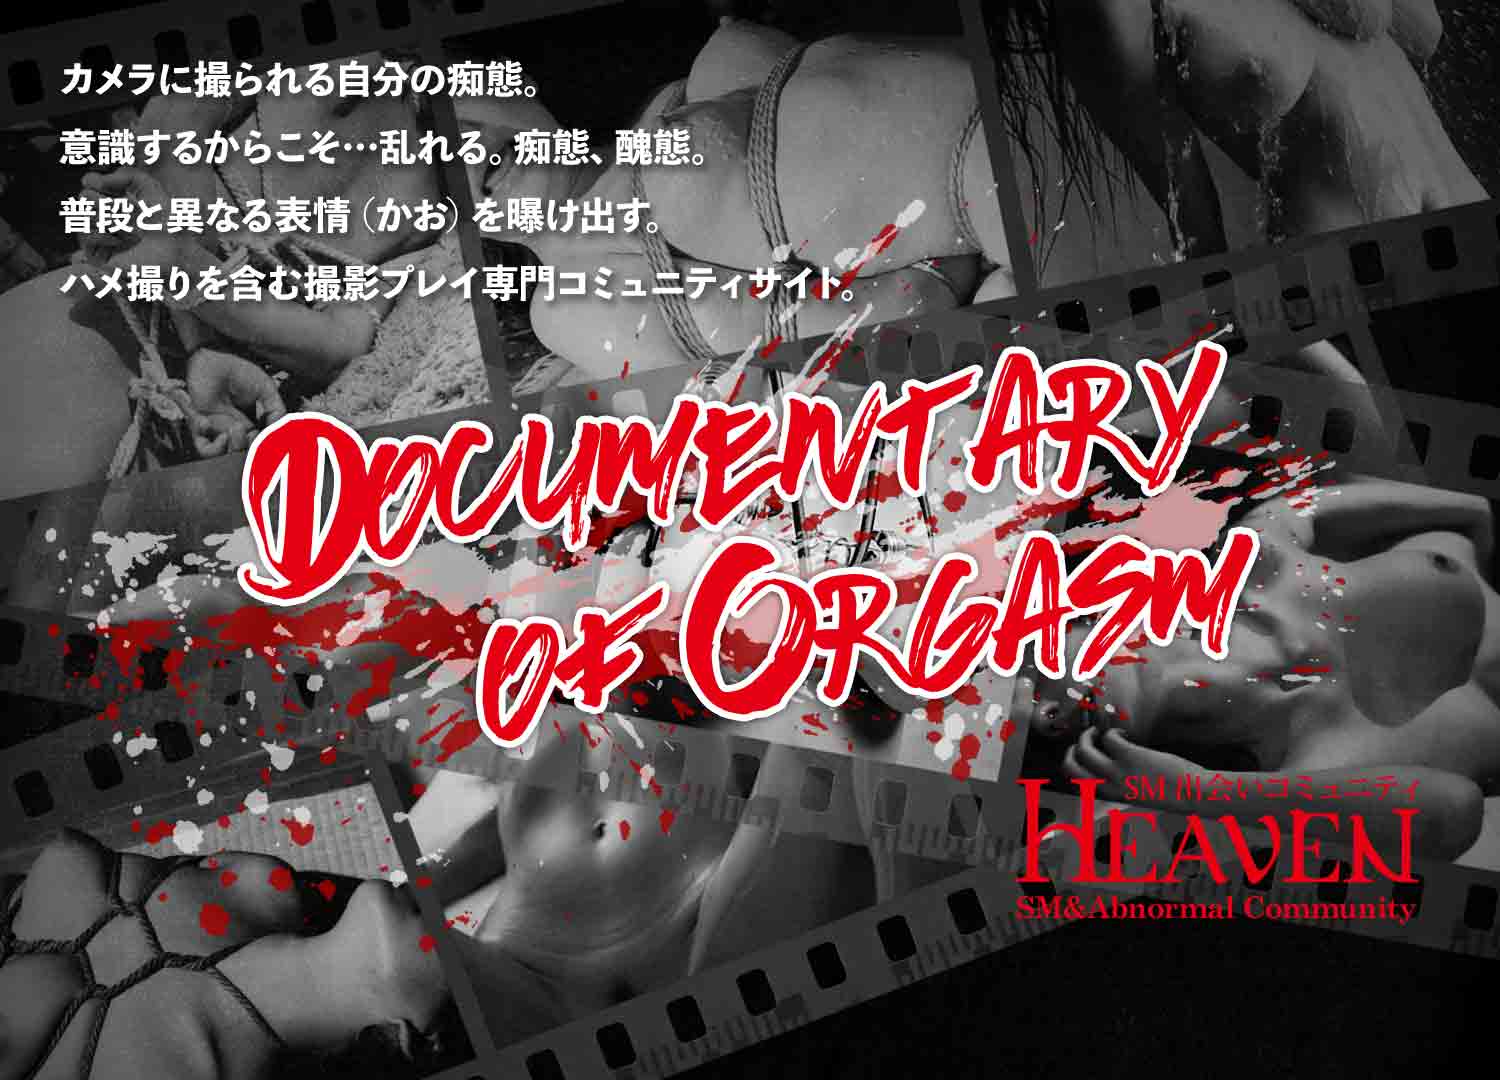 HEAVEN - Documentary of Orgasm